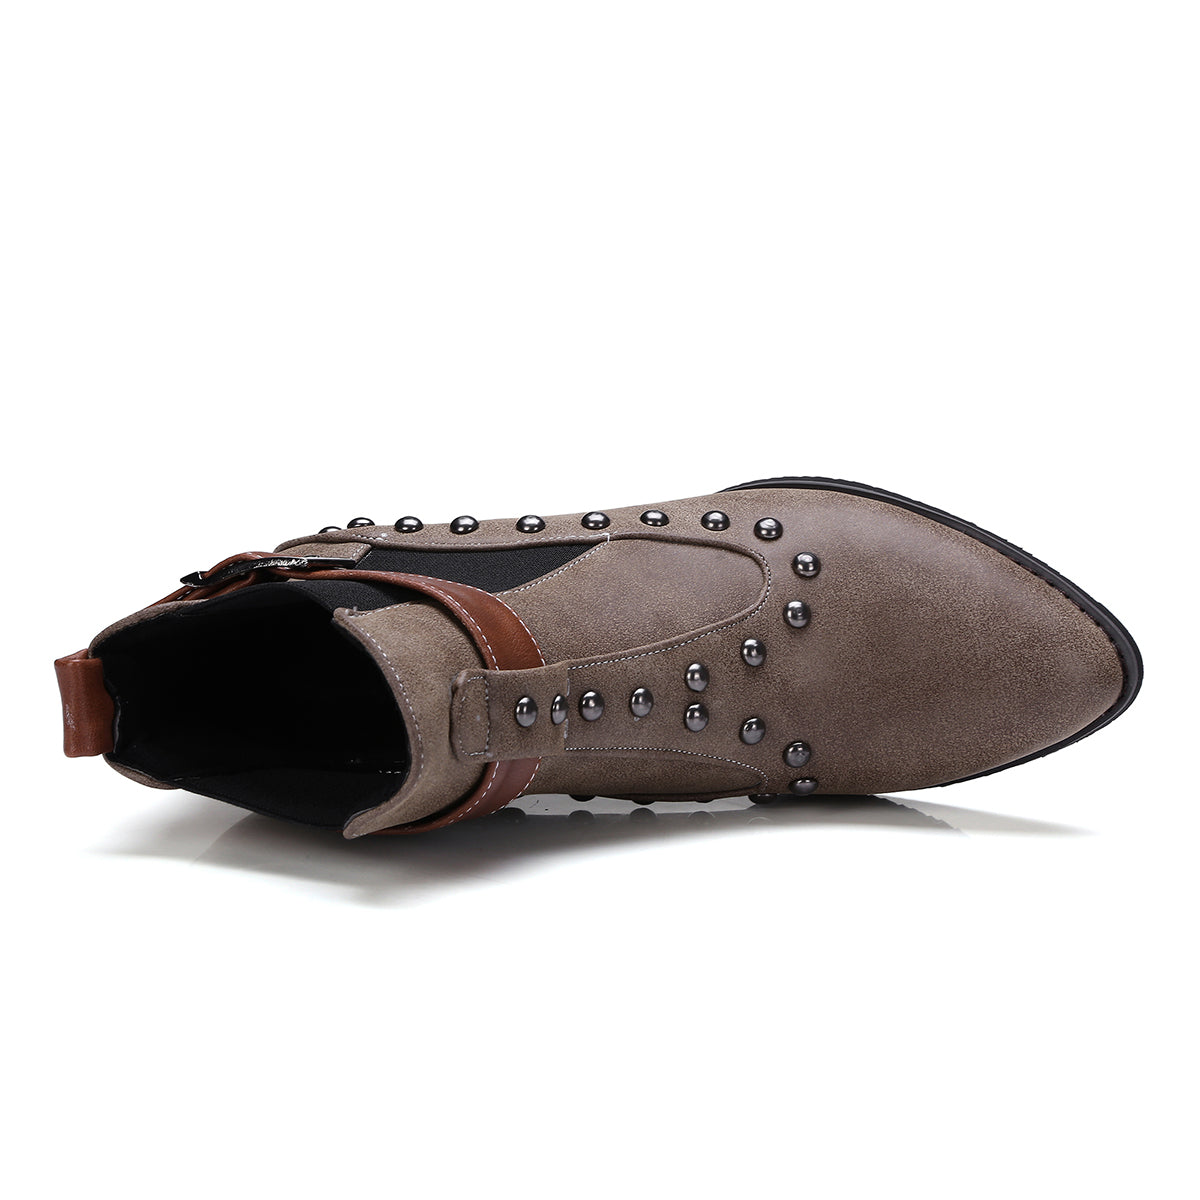 Bigsizeheels Matte rivet punk ankle boots- Brown/big size boots